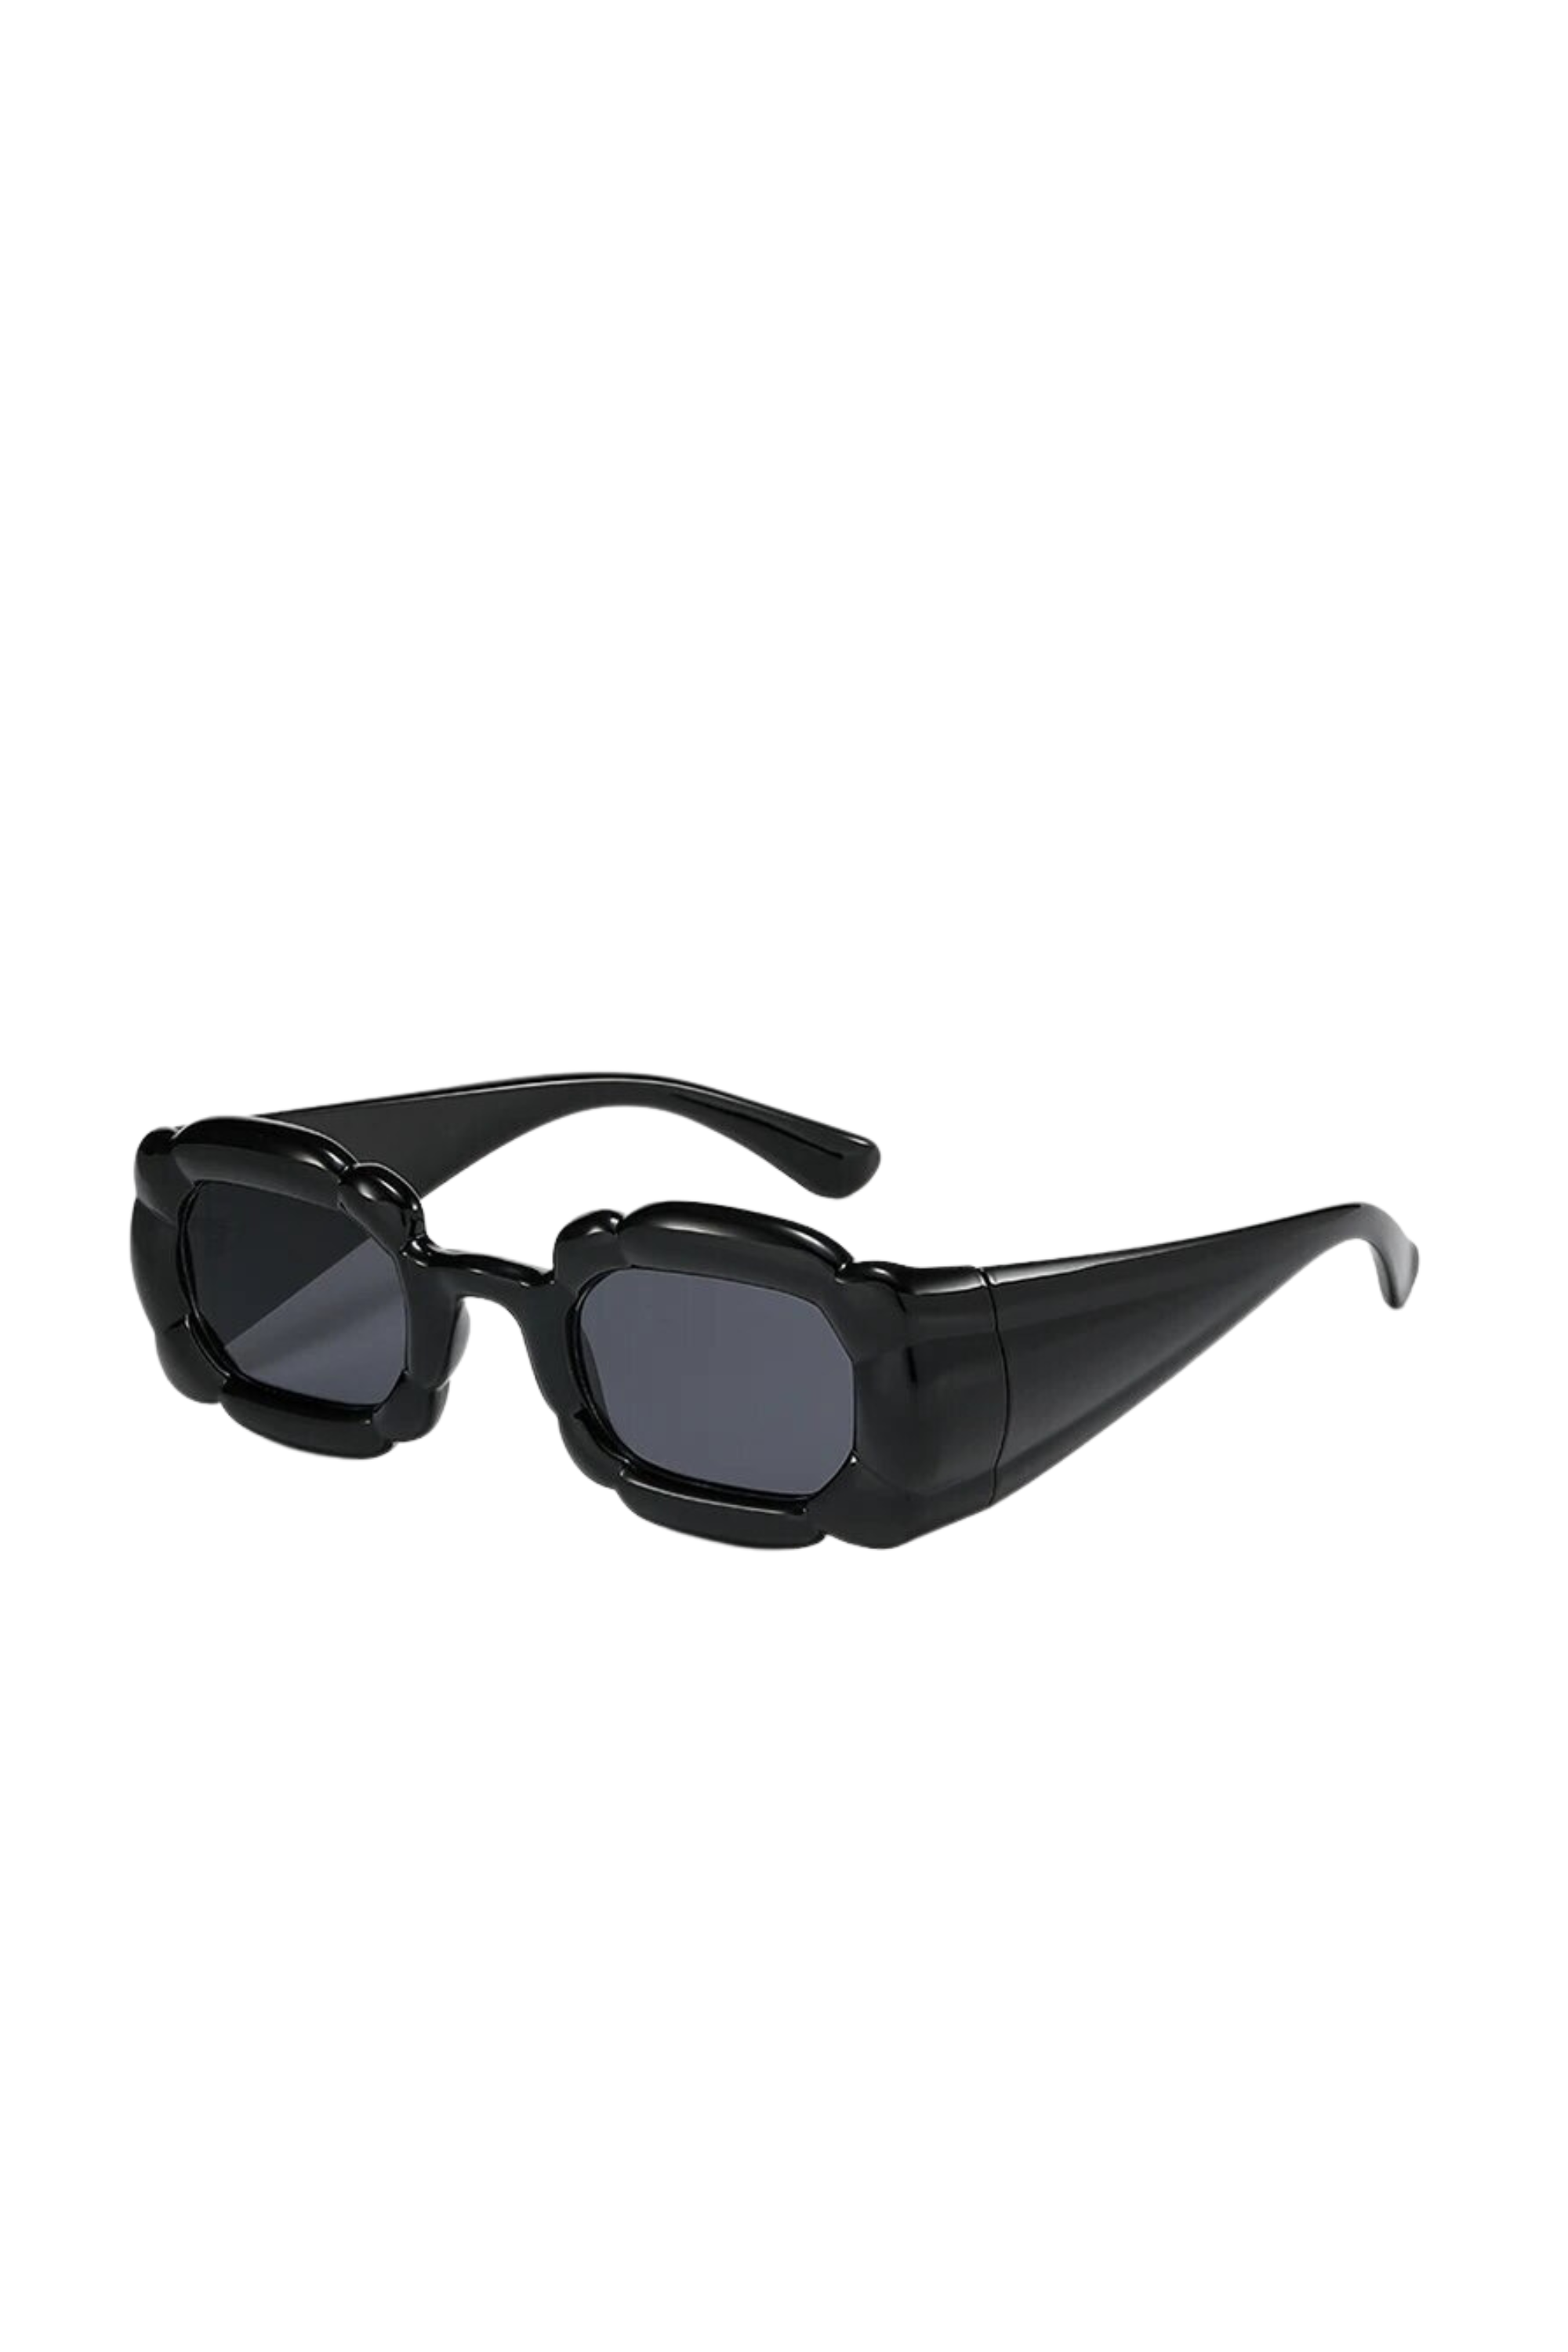 GOLDxTEAL modern puff black sunglasses.